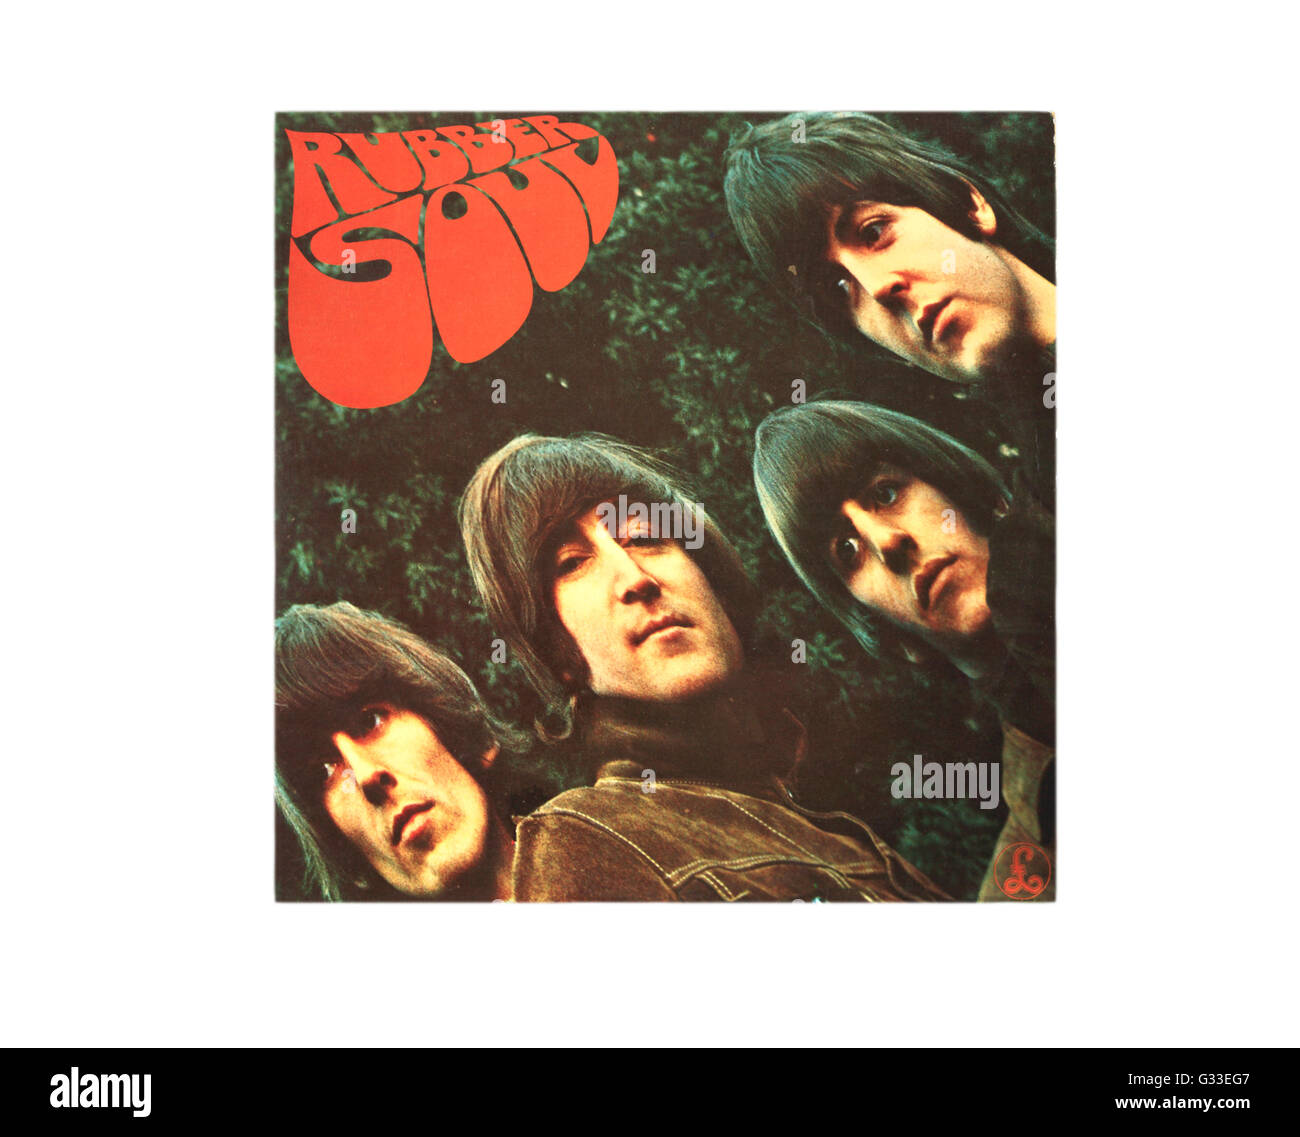 Rubber Soul lange Album-Cover von The Beatles spielen. Stockfoto